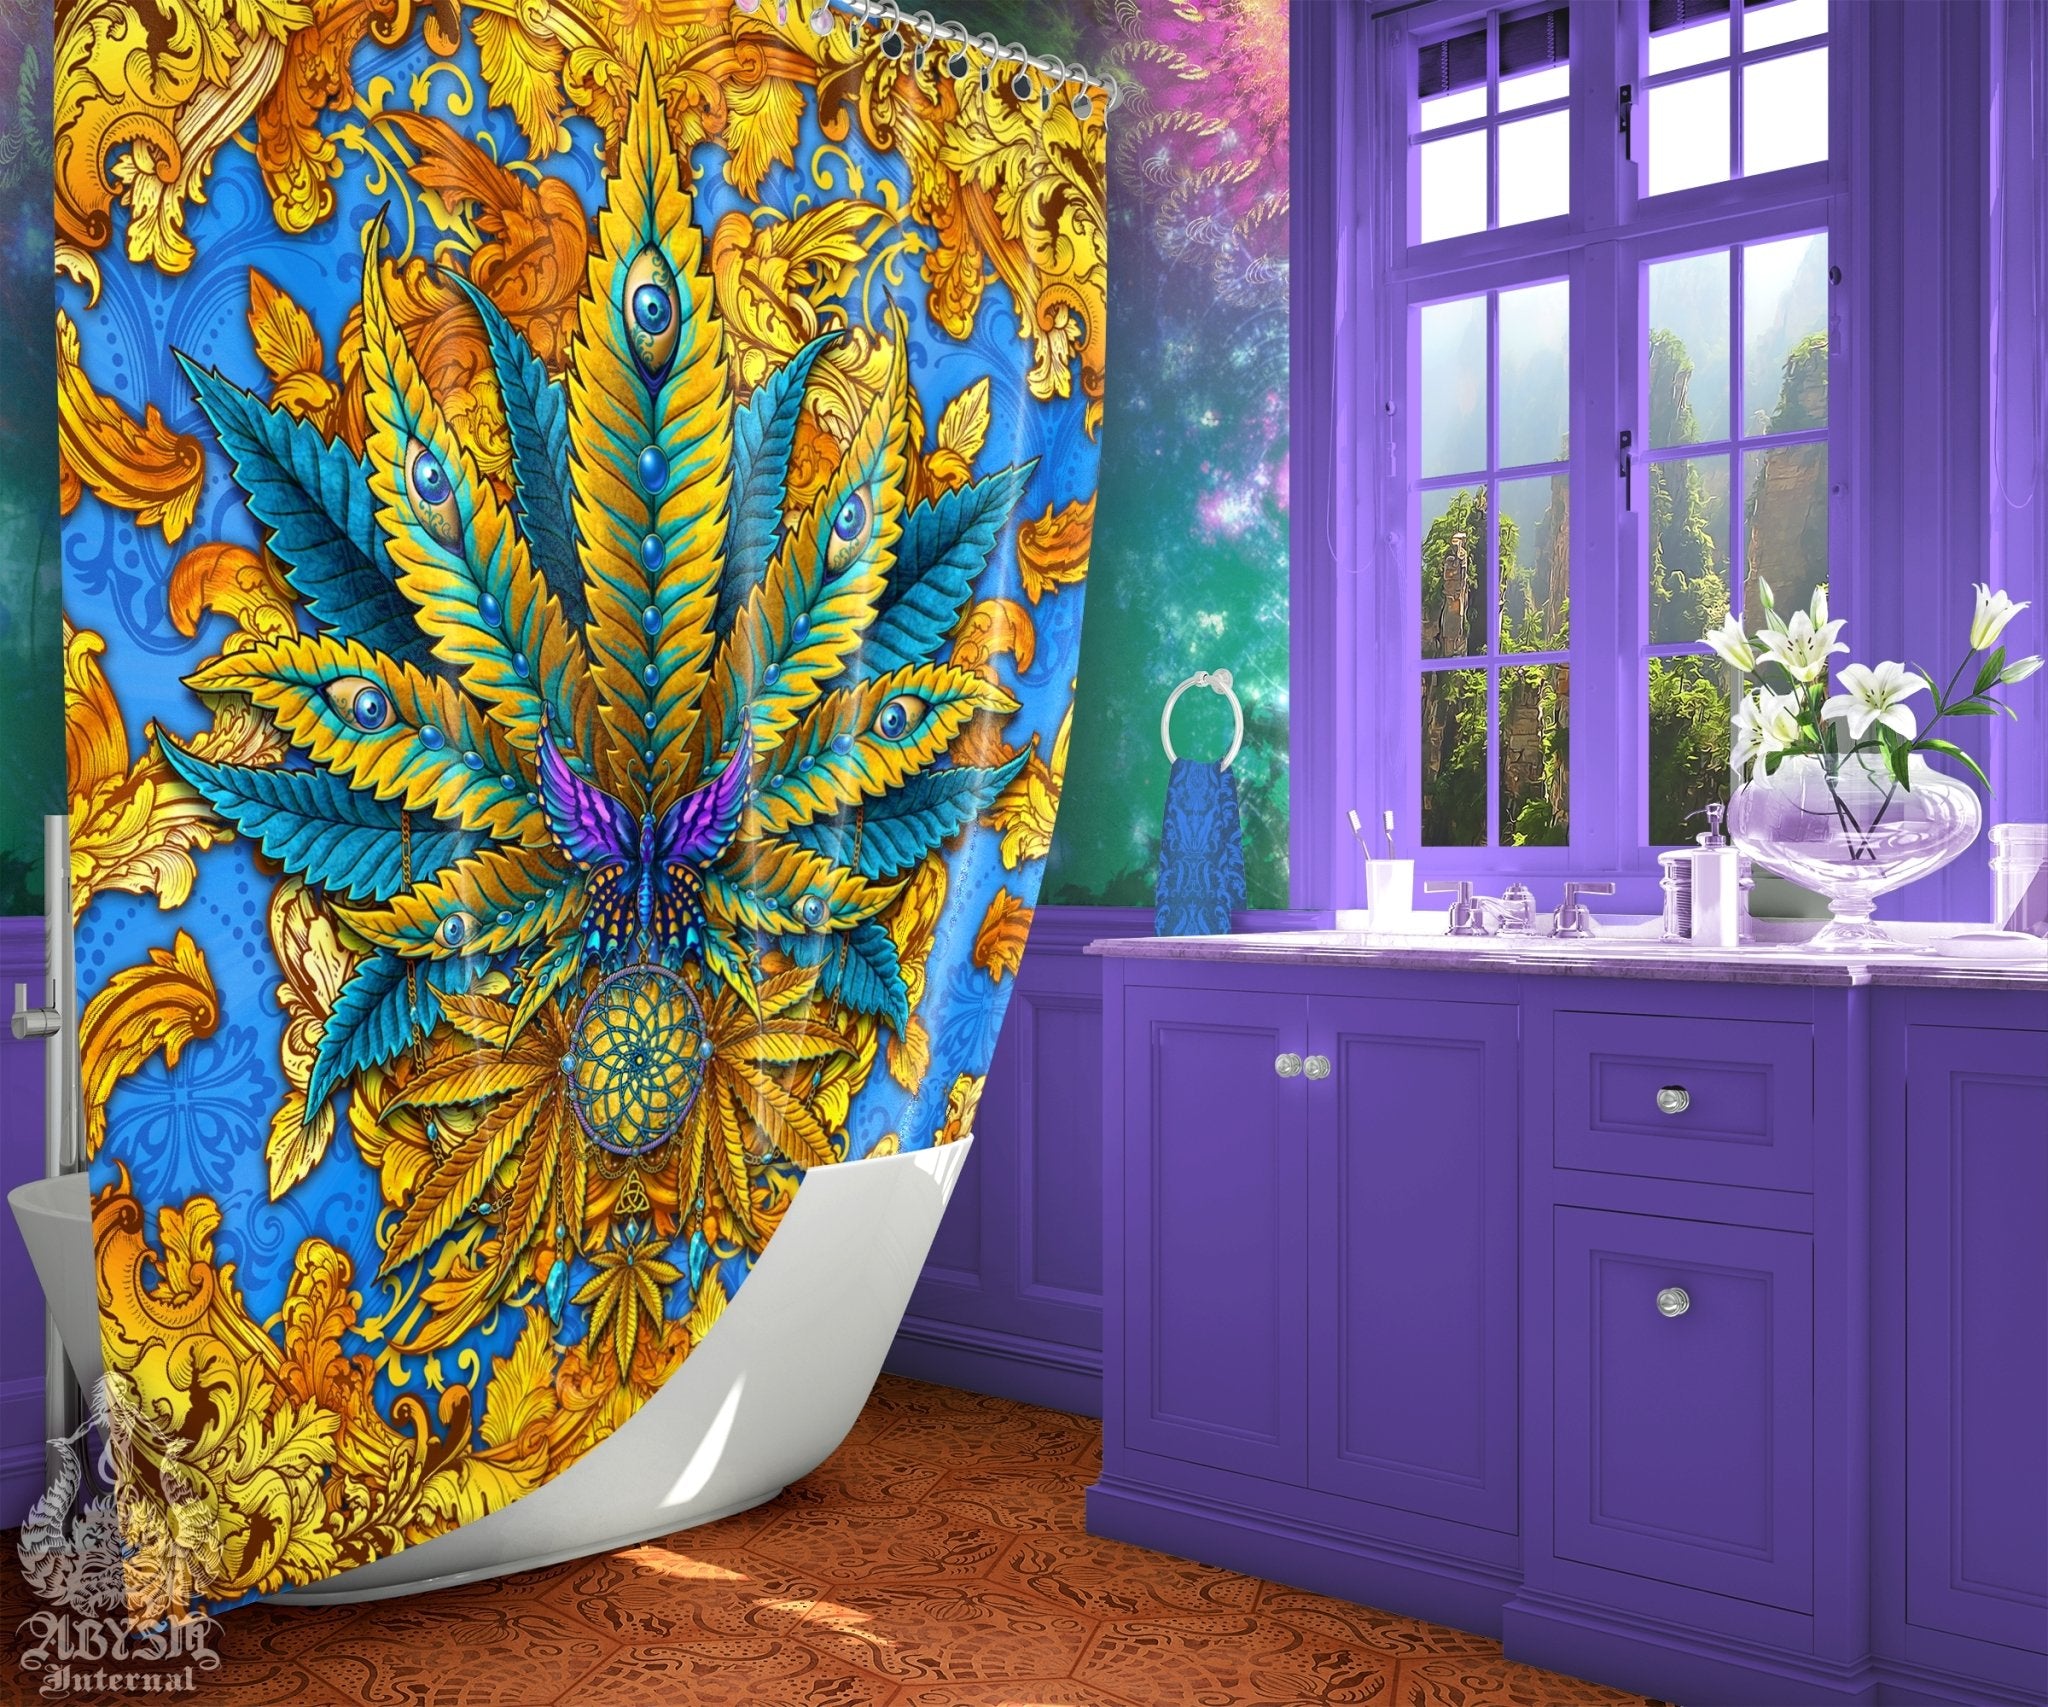 Weed Shower Curtain, Indie Bathroom Decor, Cannabis Print, Hippie 420 Home Art - Marijuana, Cyan and Gold - Abysm Internal